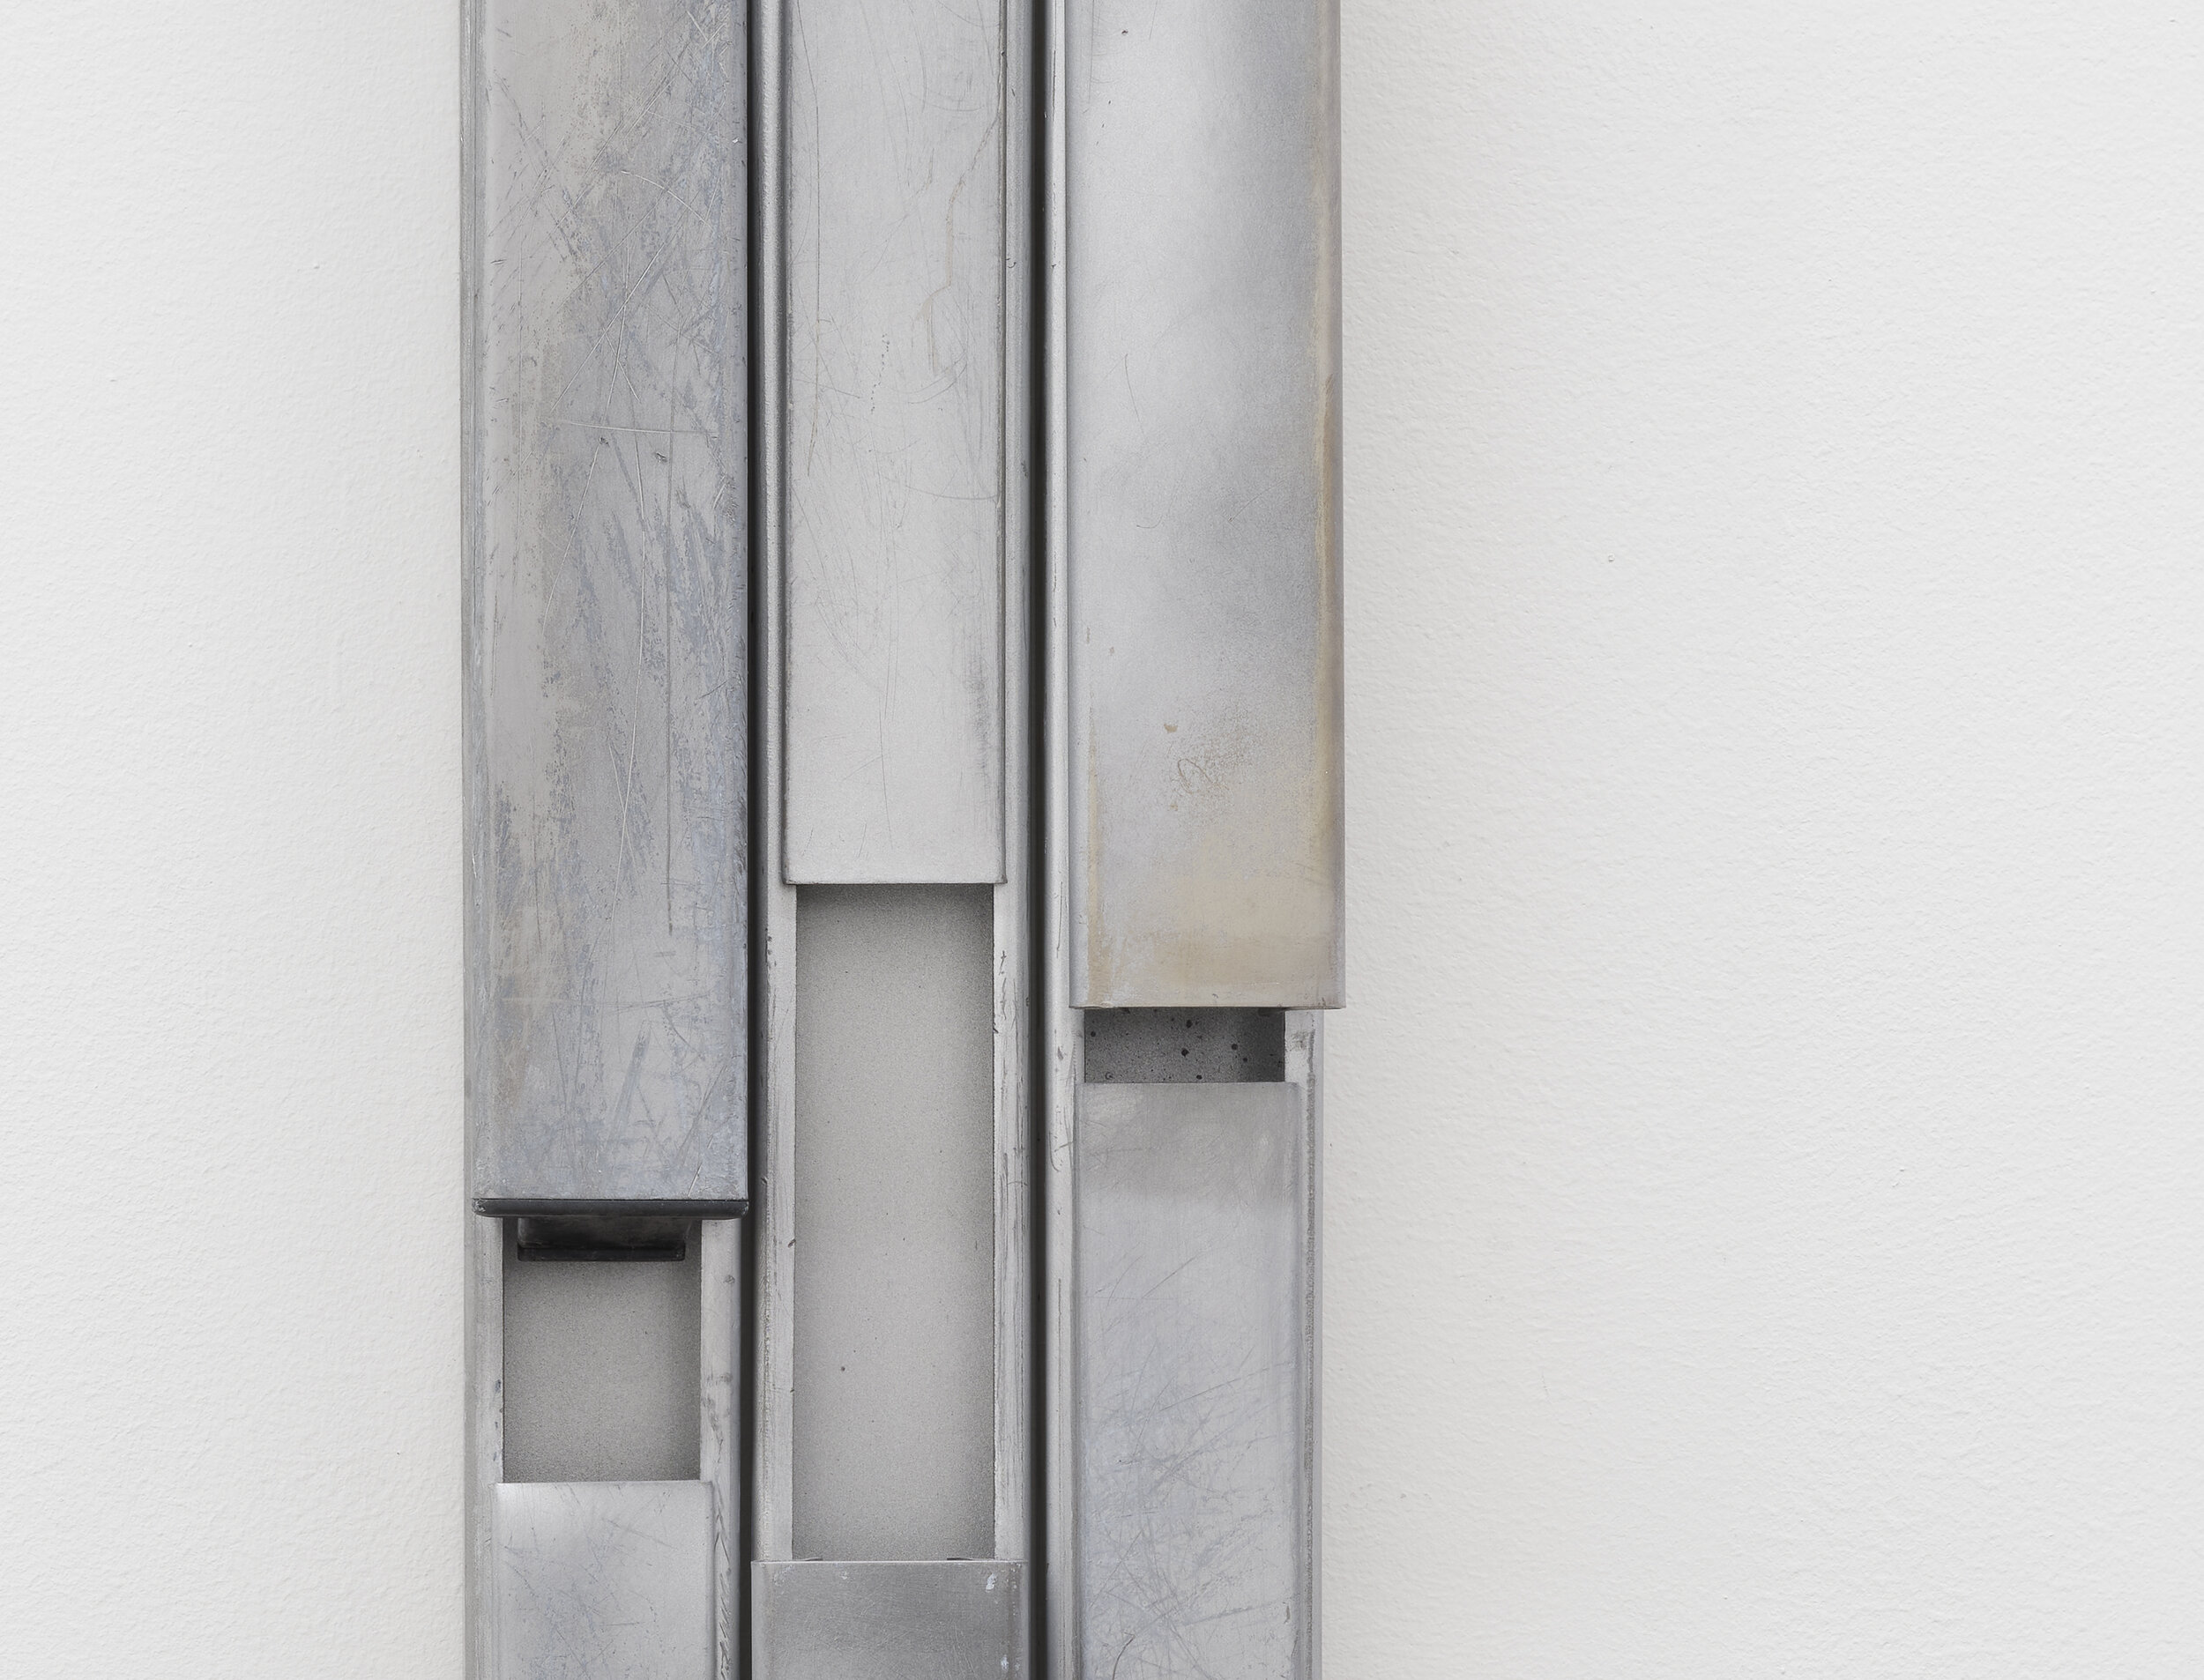  Clare Koury  Panic Bars , 2020 (detail) panic bars, hardware 36 x 10 x 2.5 inches (92 x 25 x 6 cm) 